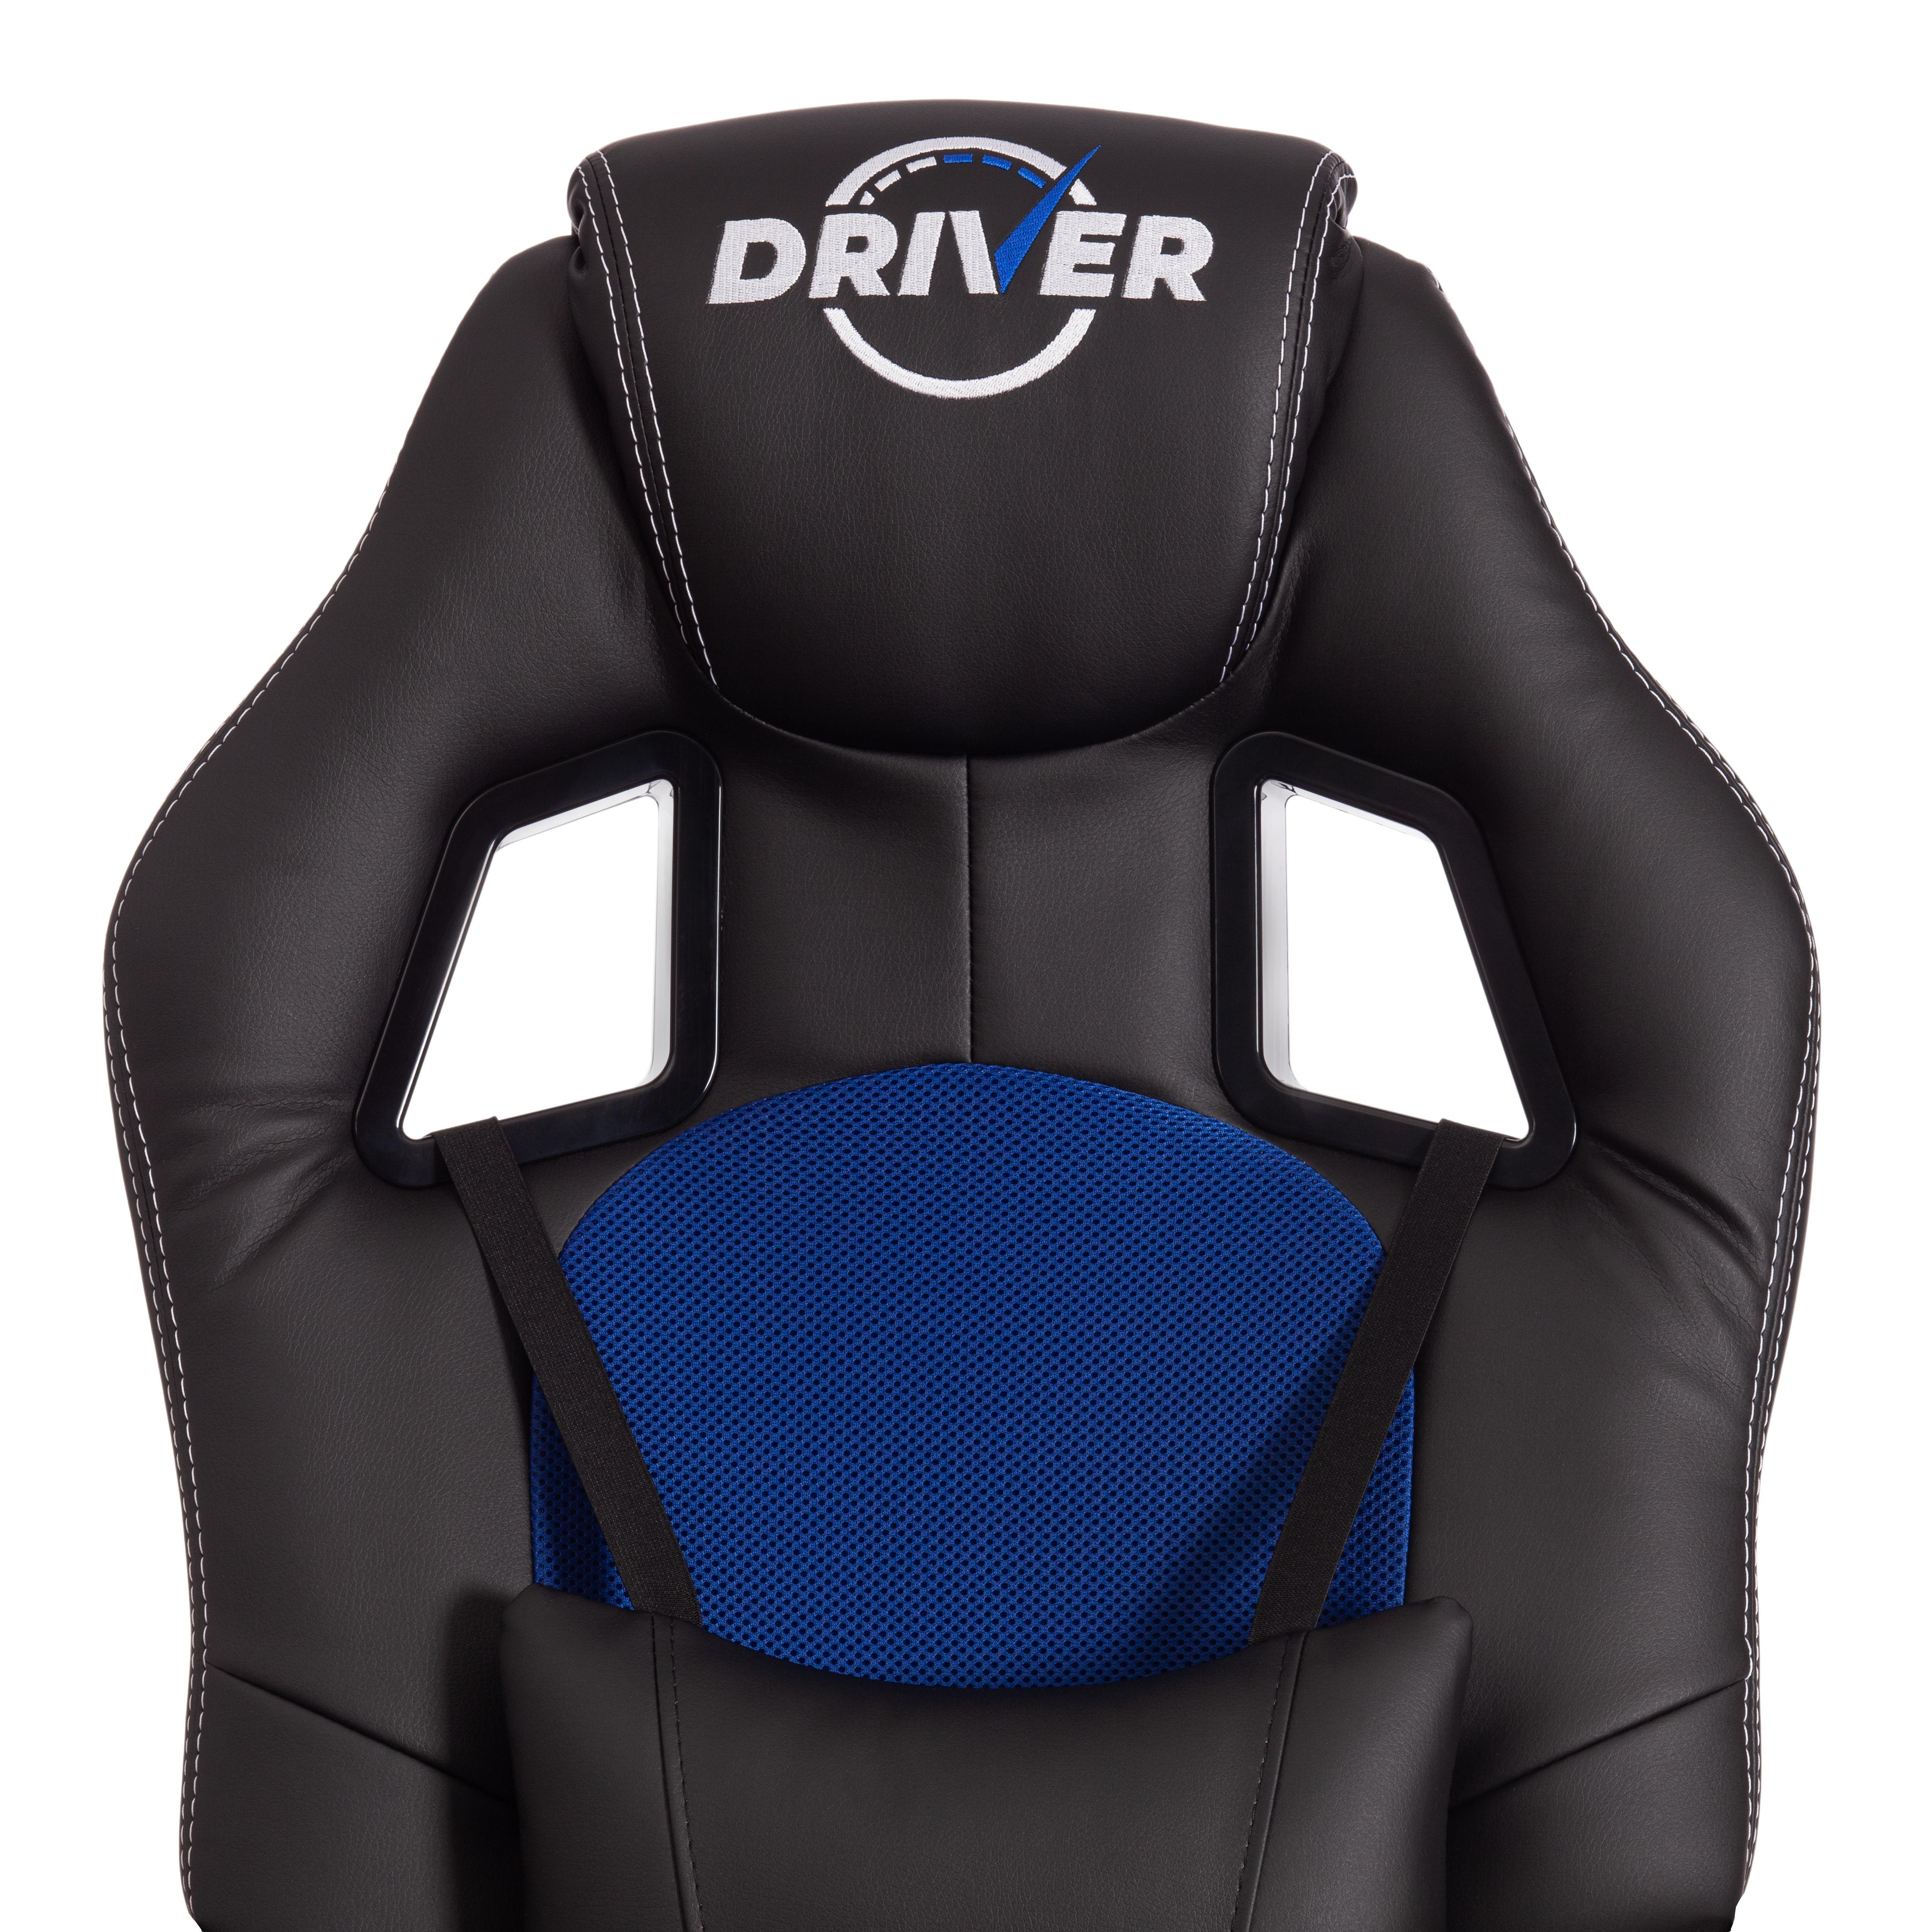 Кресло DRIVER (22) кож/зам/ткань, черный/синий, 36-6/TW-10